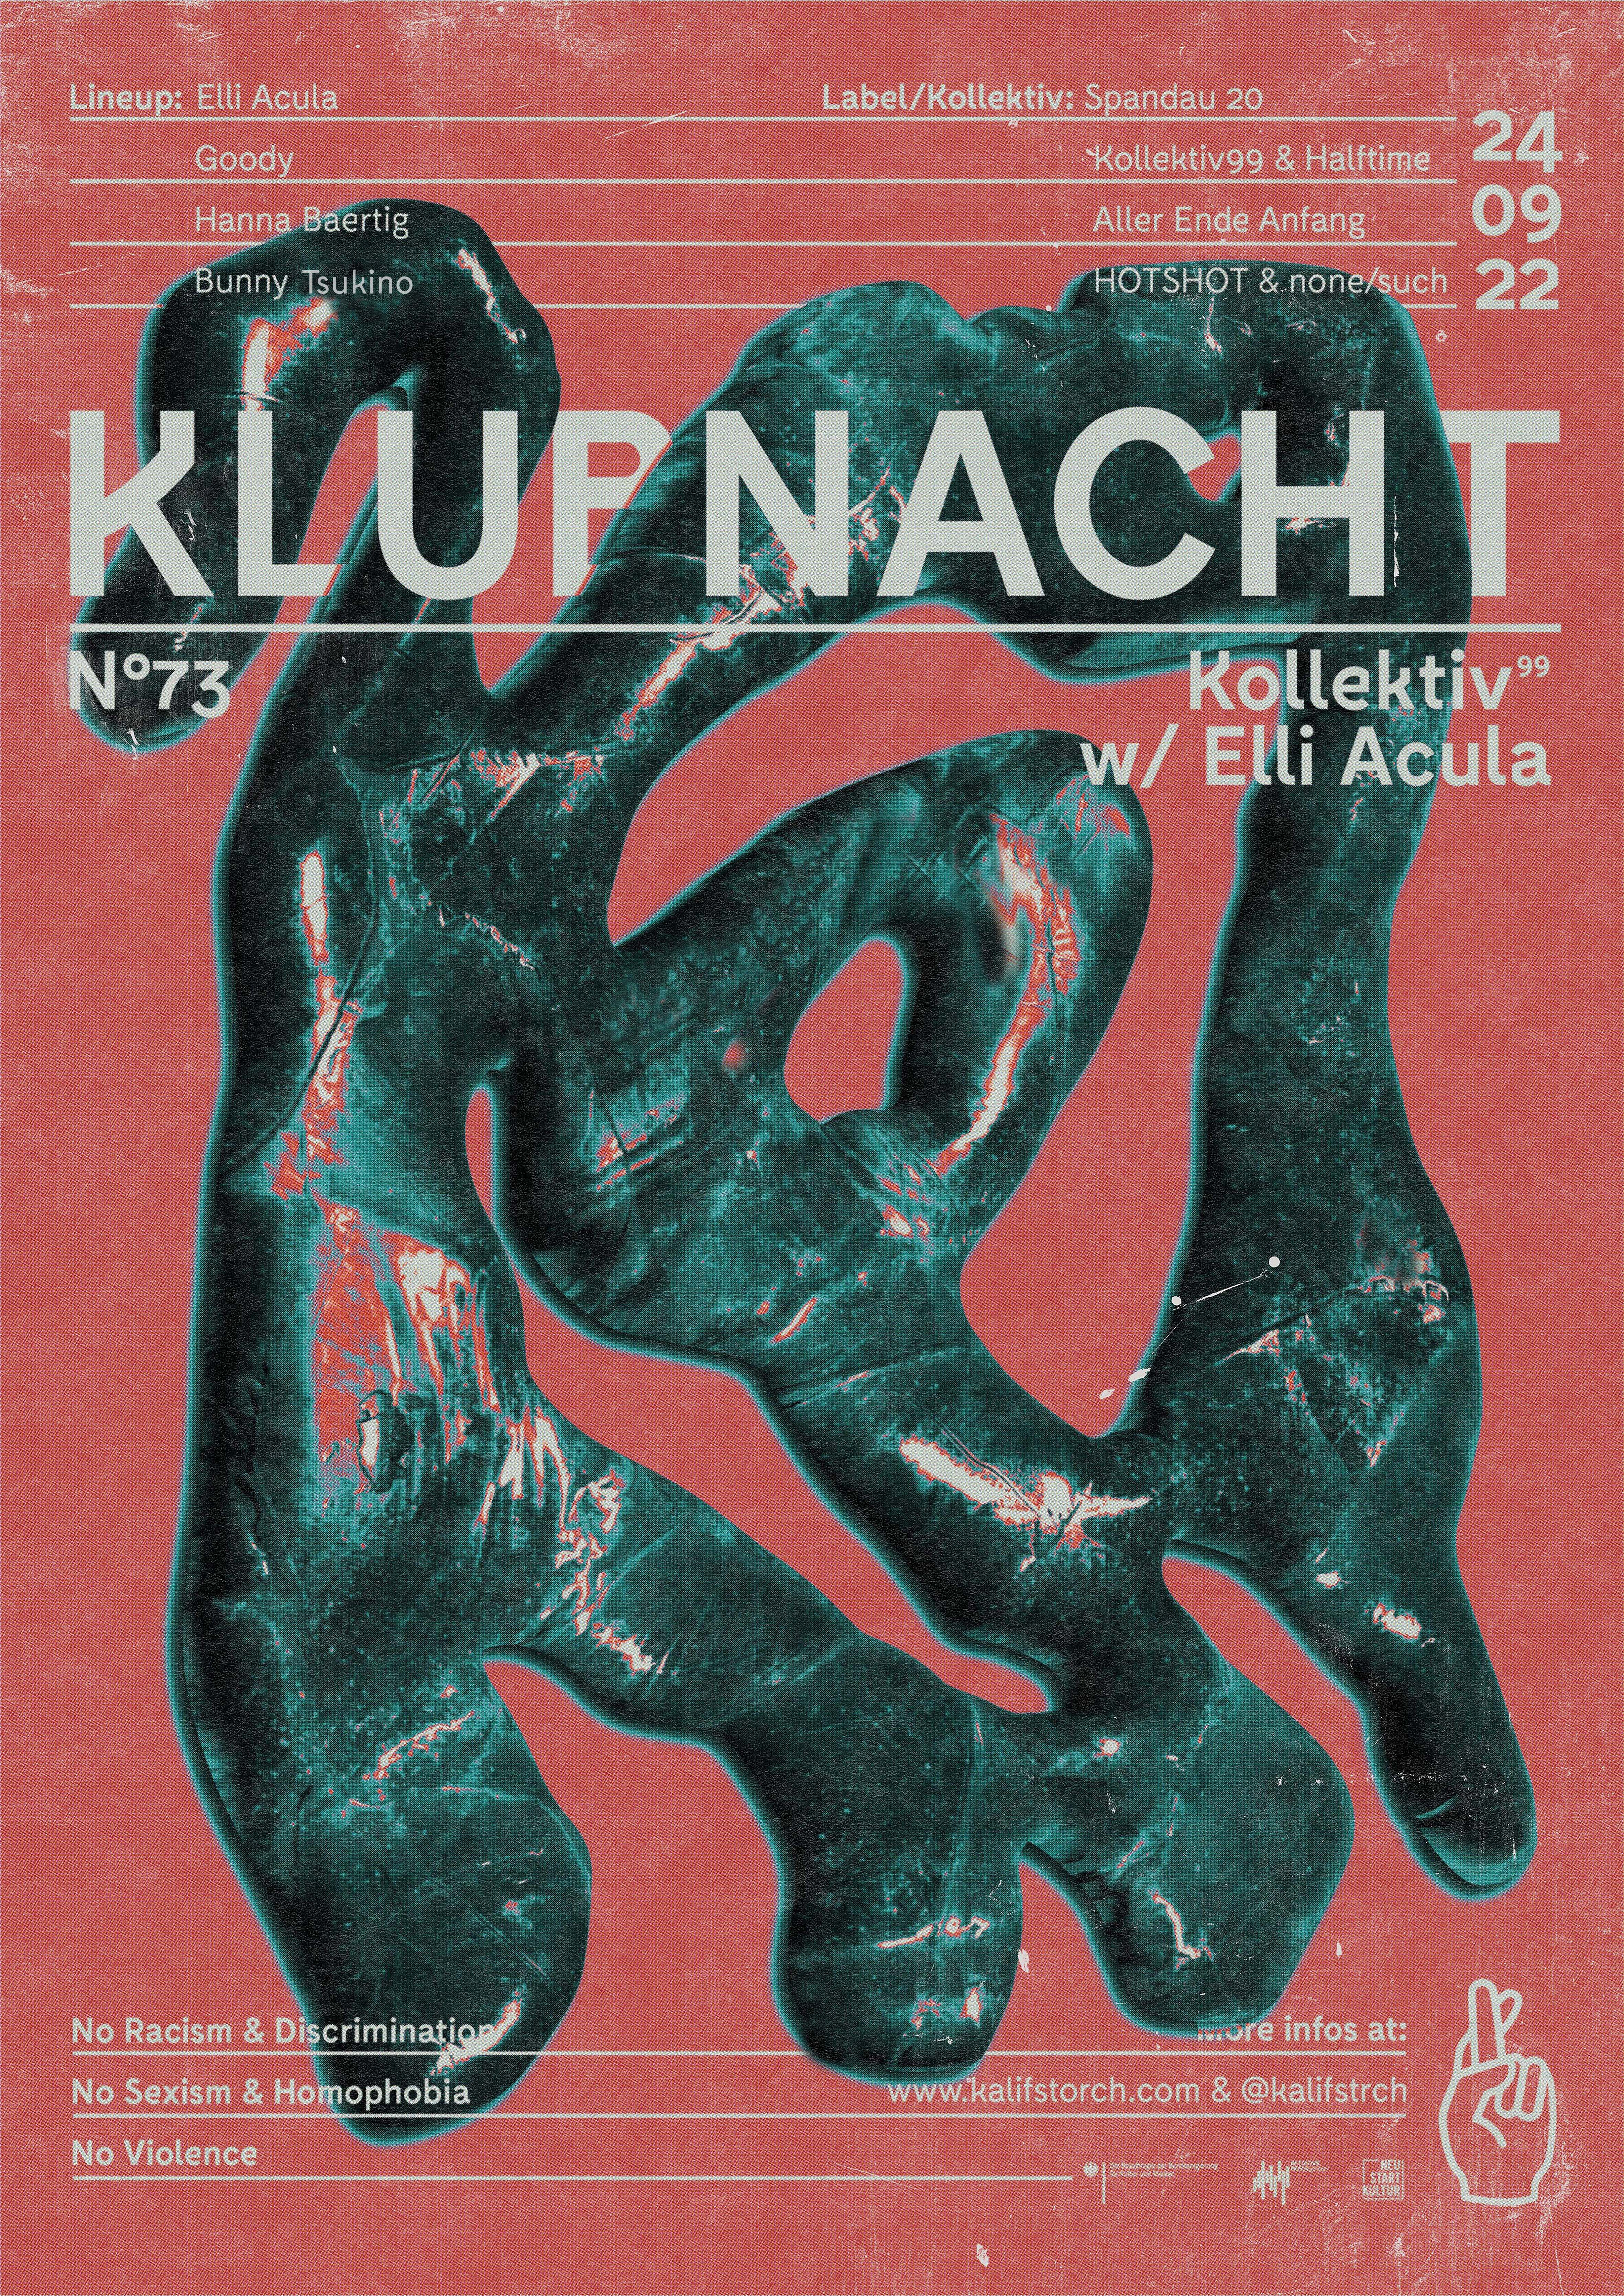 Klubnacht N°73 - Kollektiv99 - Flyer front